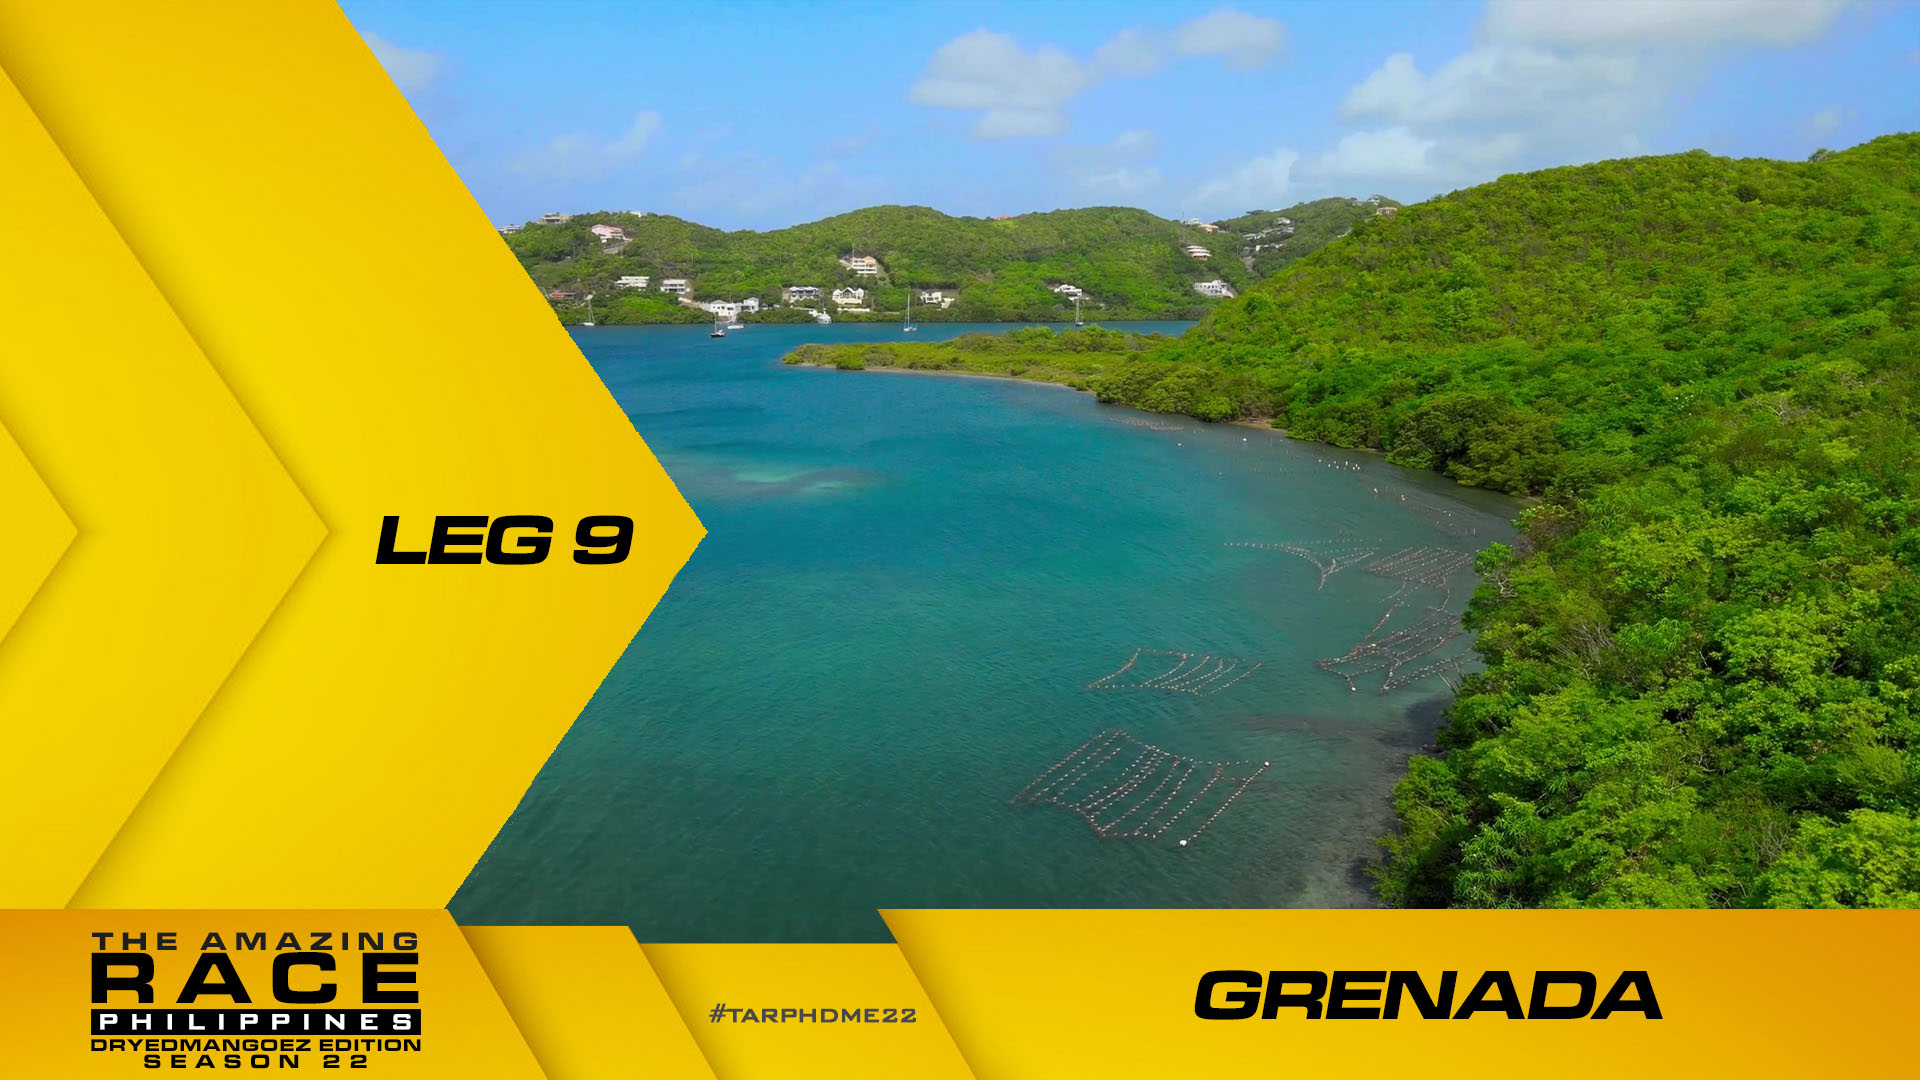 The Amazing Race Philippines: DryedMangoez Edition Season 22, Leg 9 – Grenada